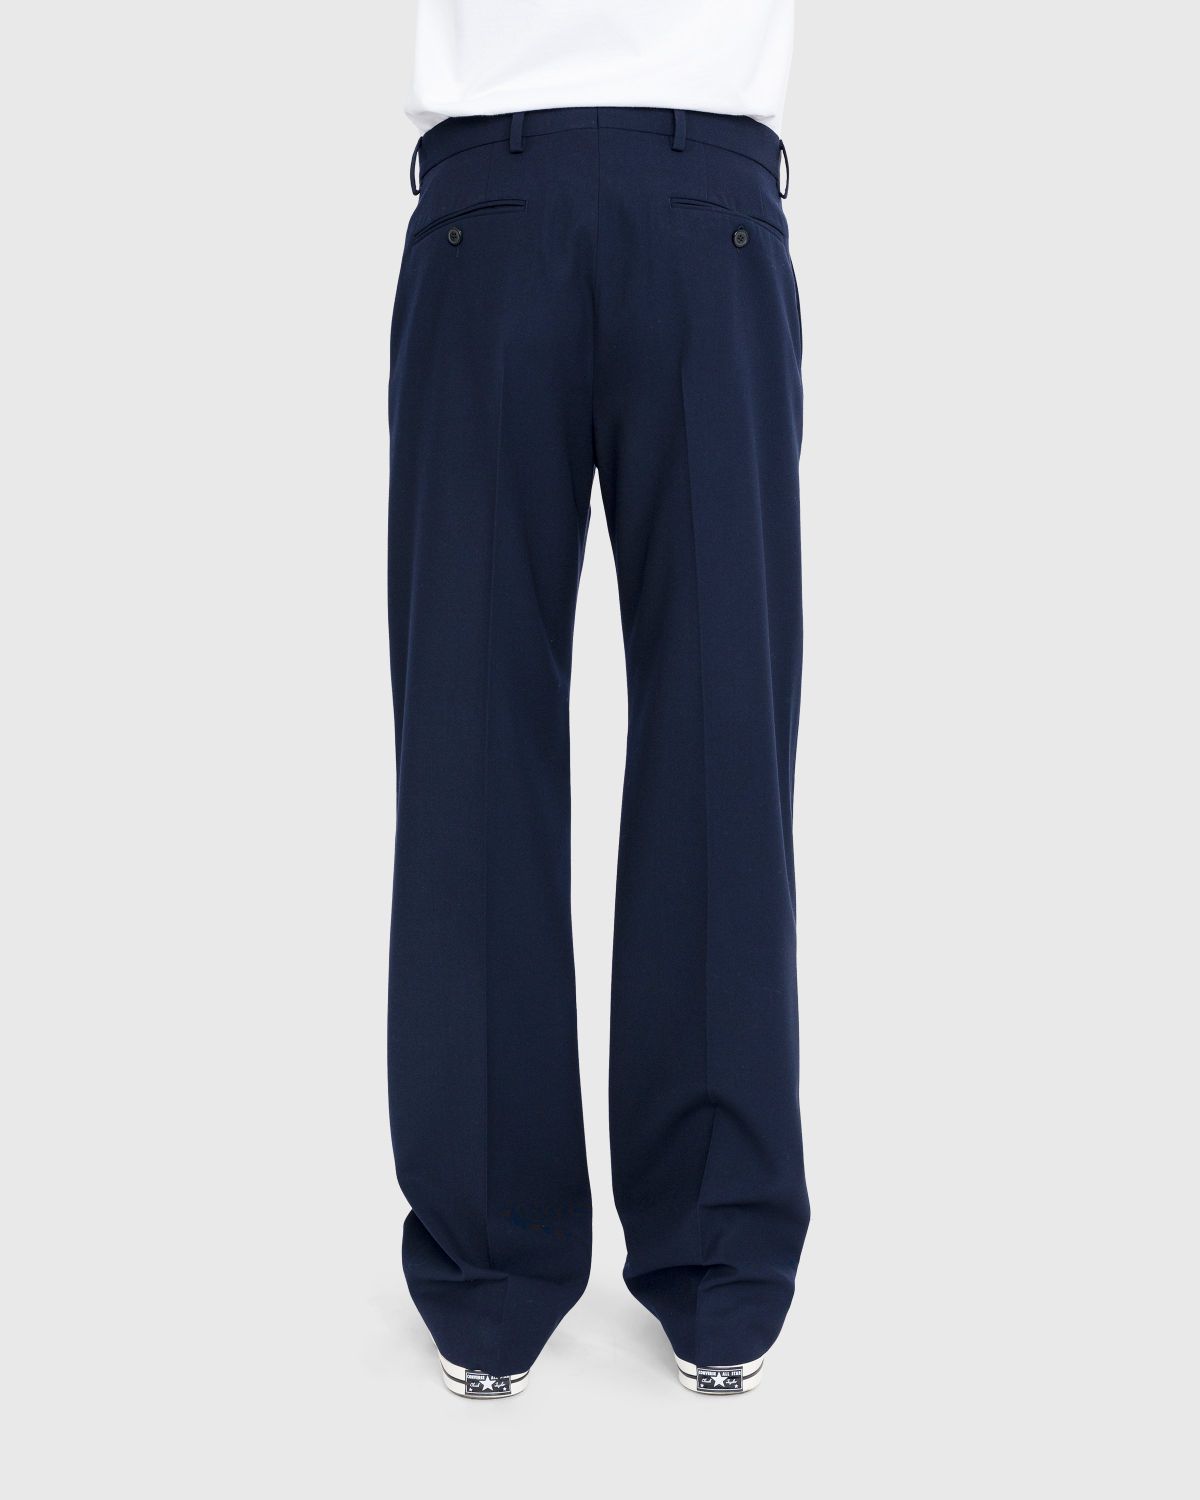 Dries van Noten – Pinnet Long Pants Blue - Trousers - Blue - Image 4